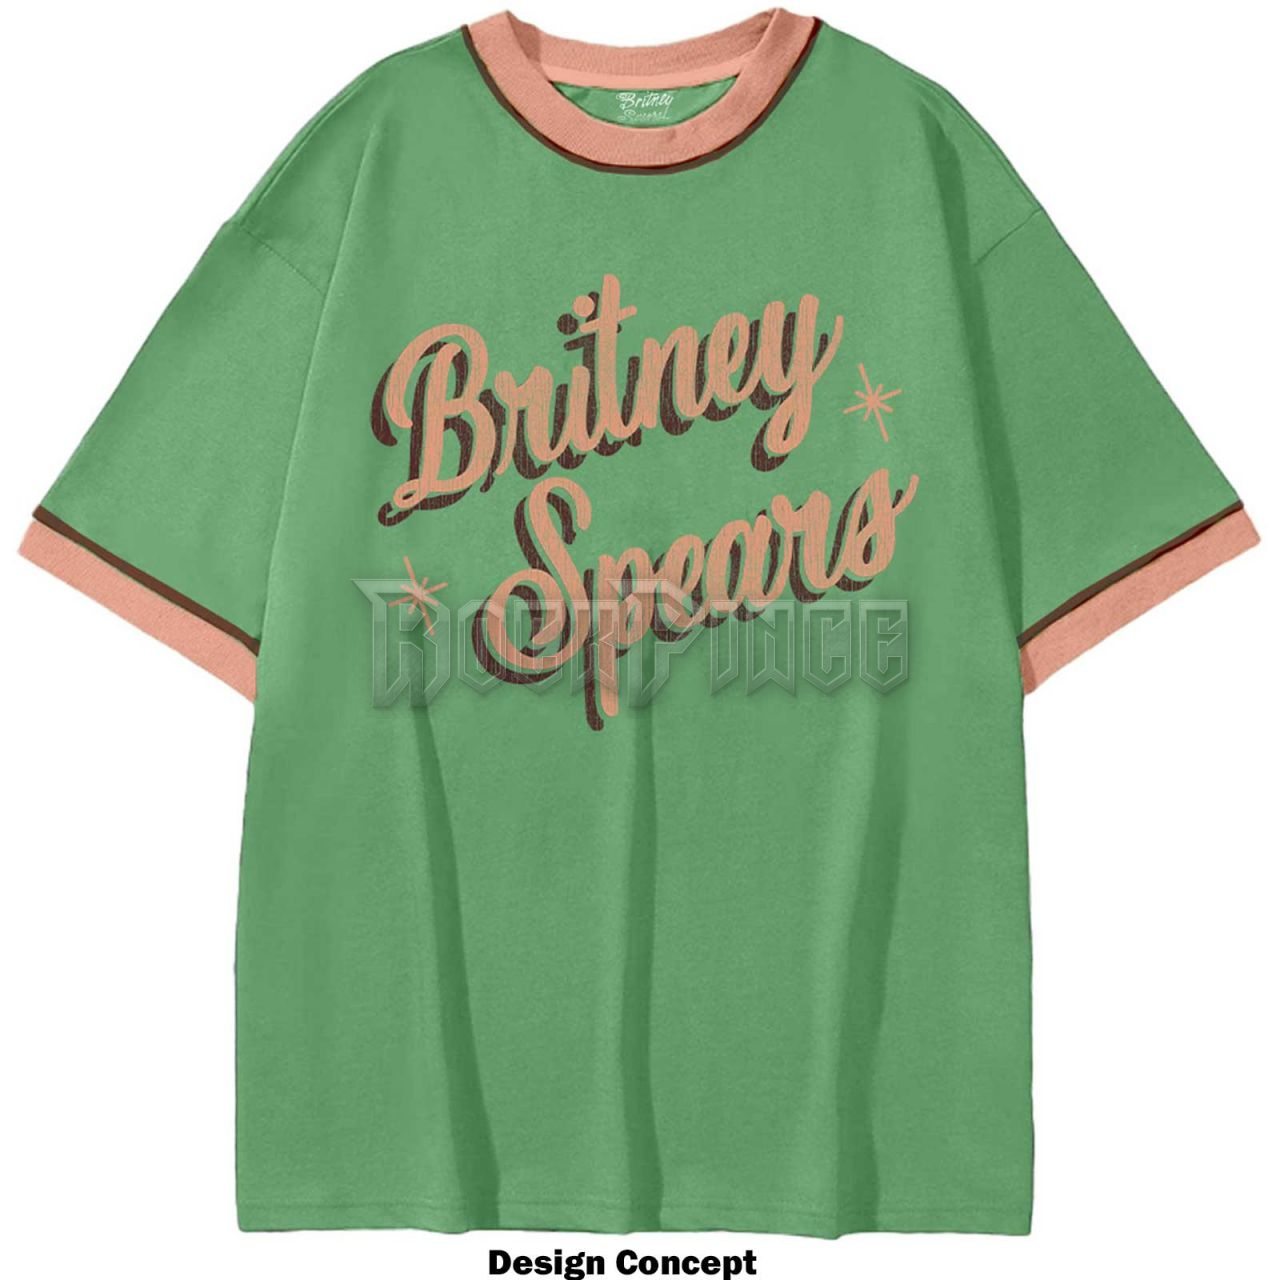 Britney Spears - Retro Text - unisex póló - BRITTS03MGR